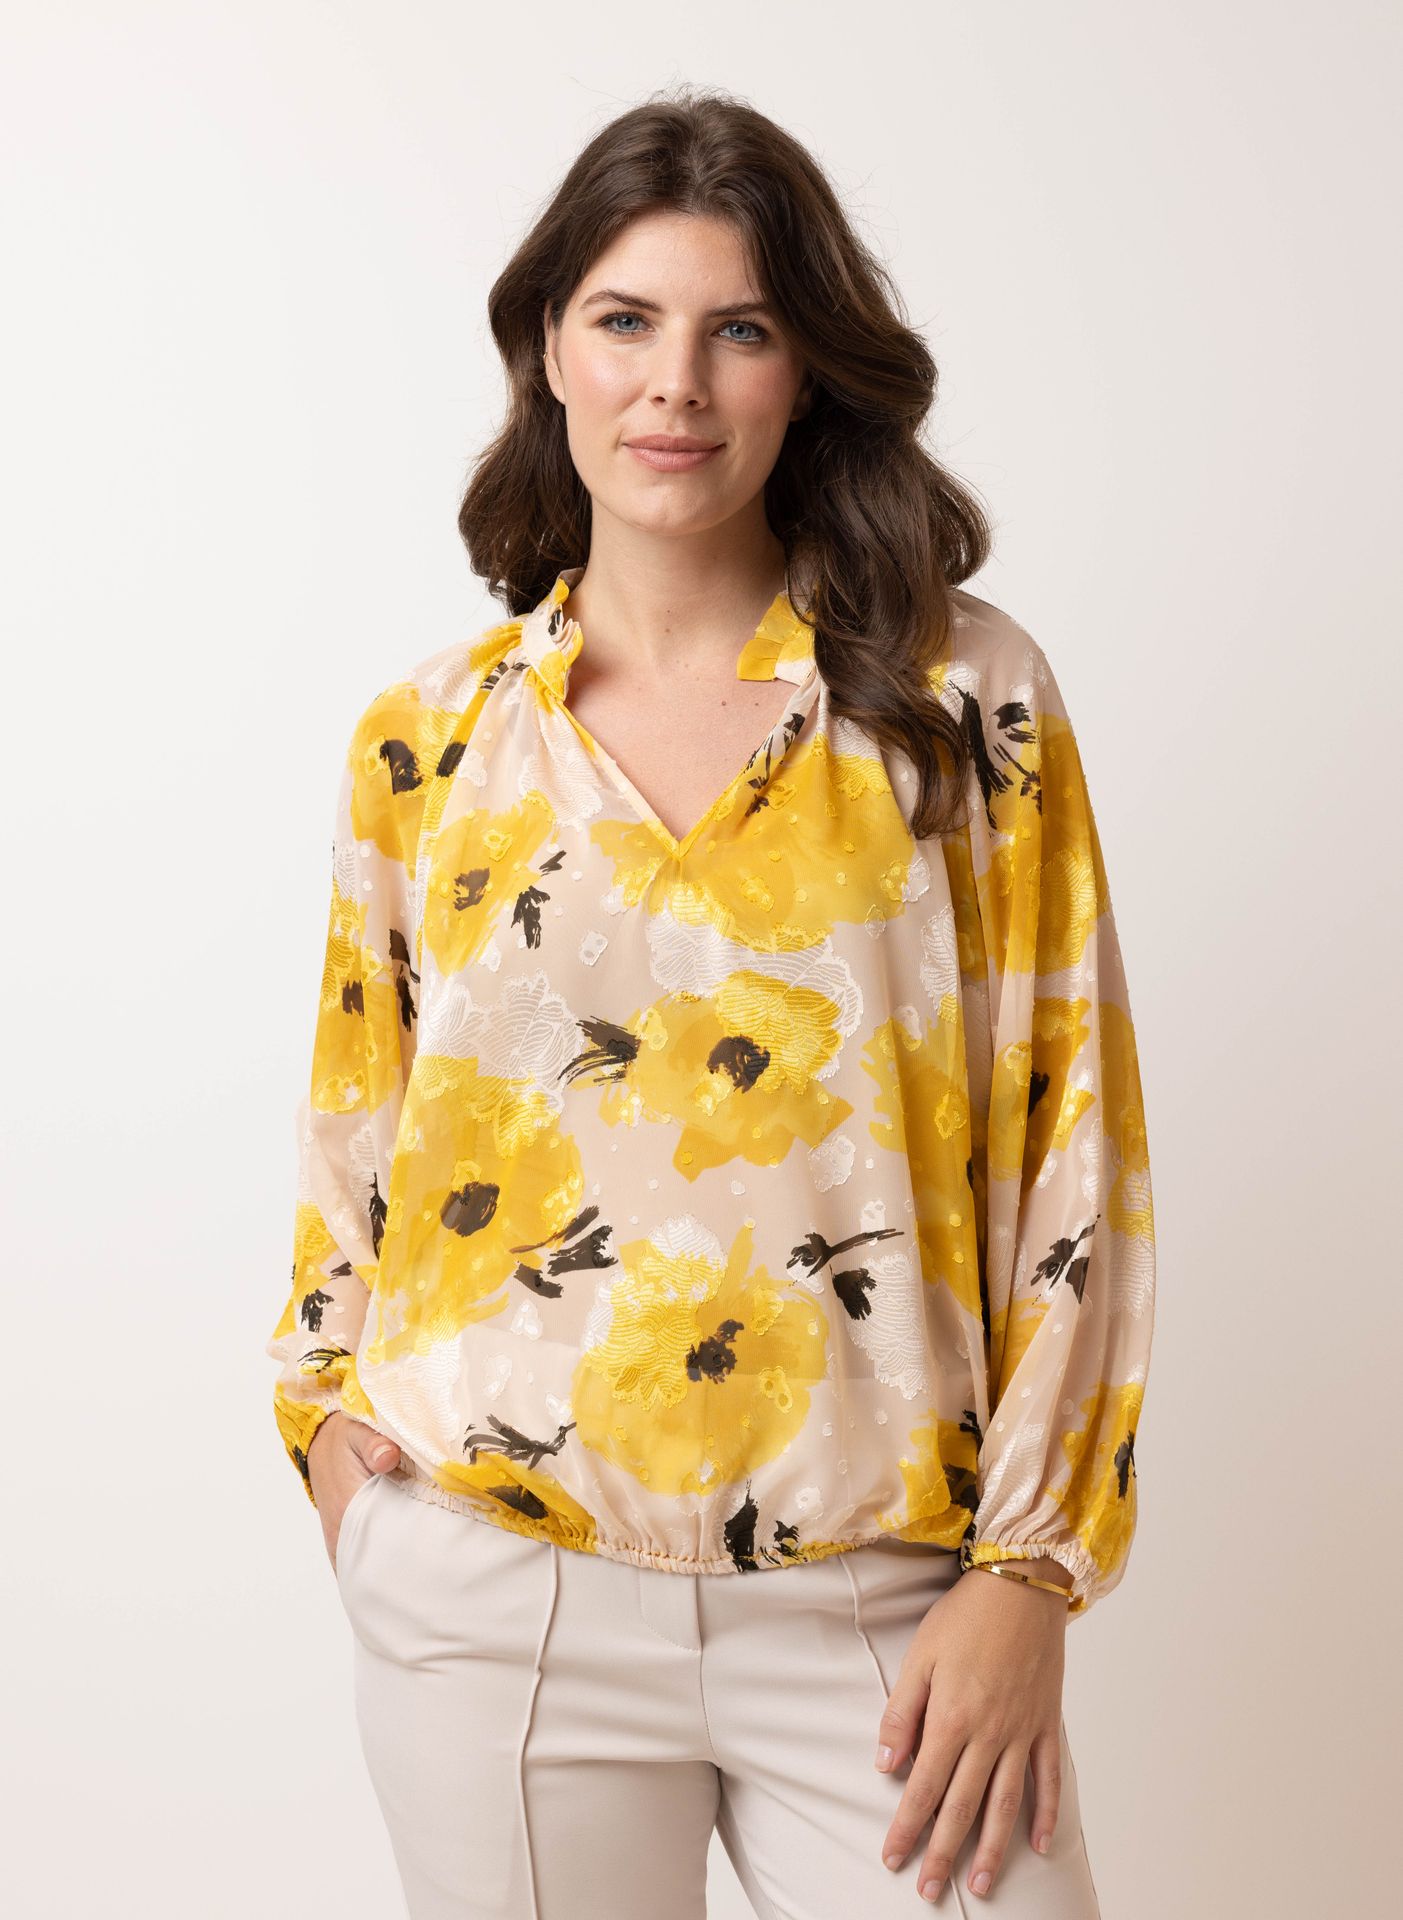 Norah Gele blouse yellow/ecru 214215-341